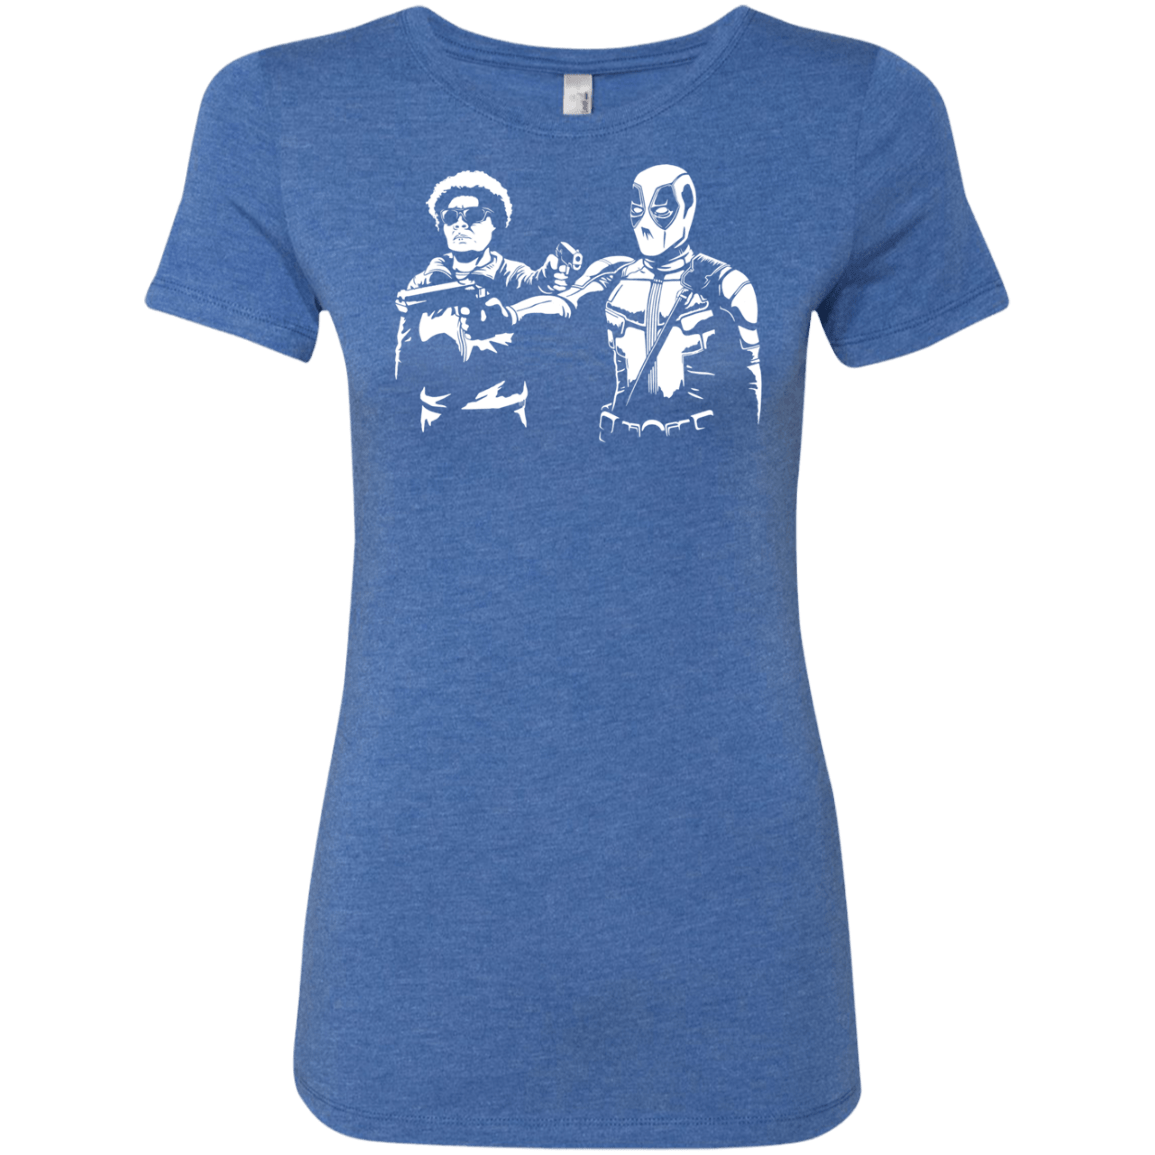 Pool Fiction Women's Triblend T-Shirt